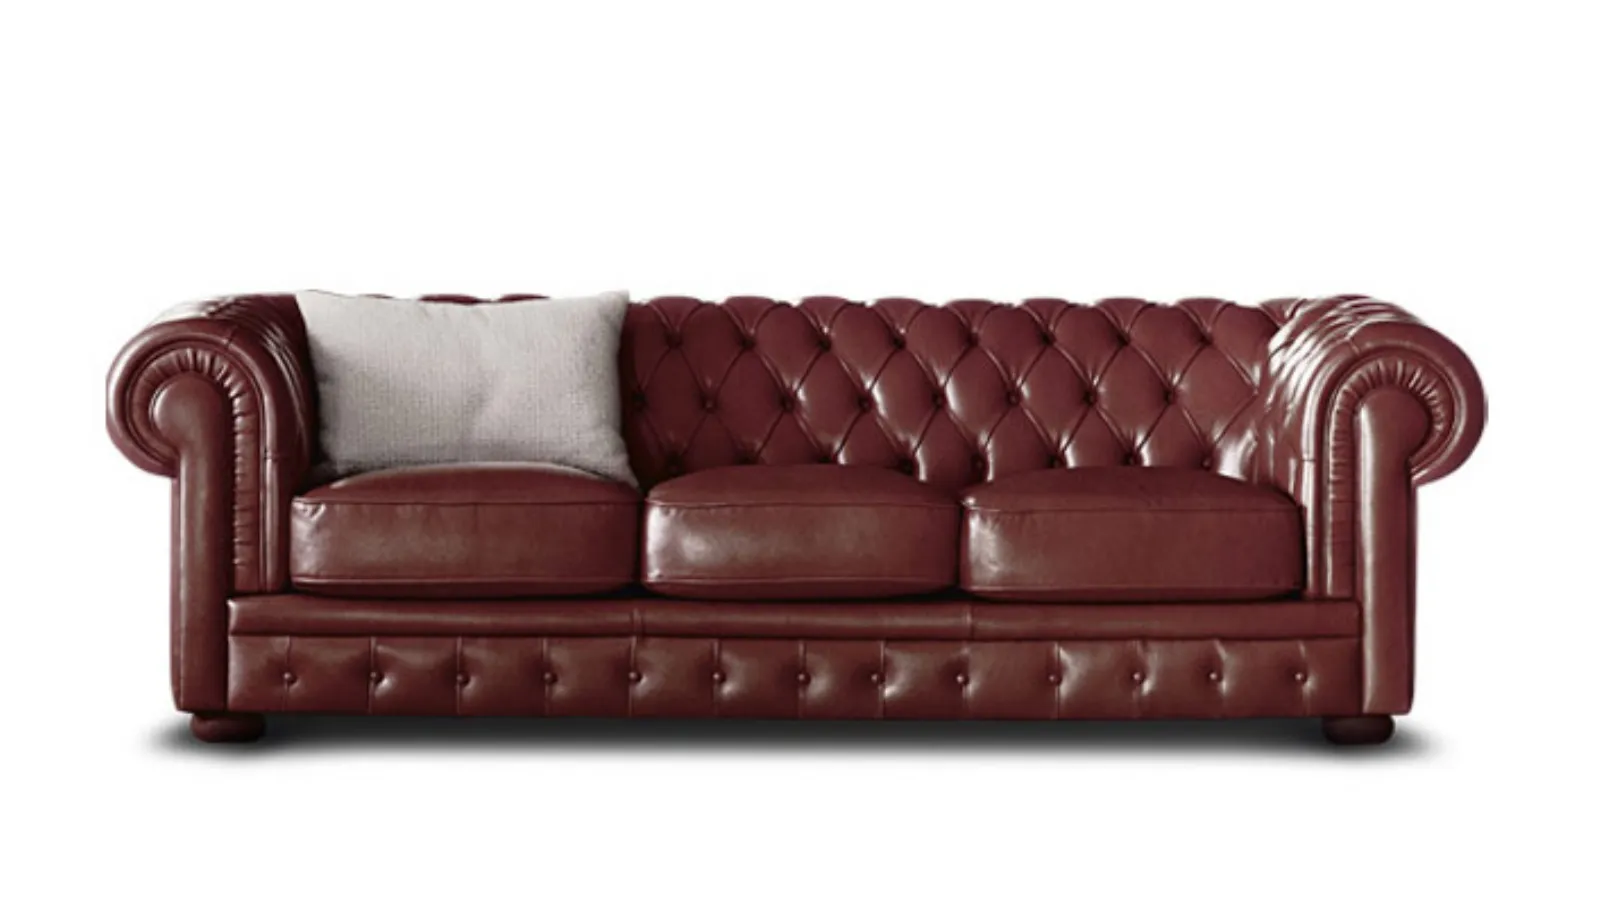 Alioth capitonne leather sofa